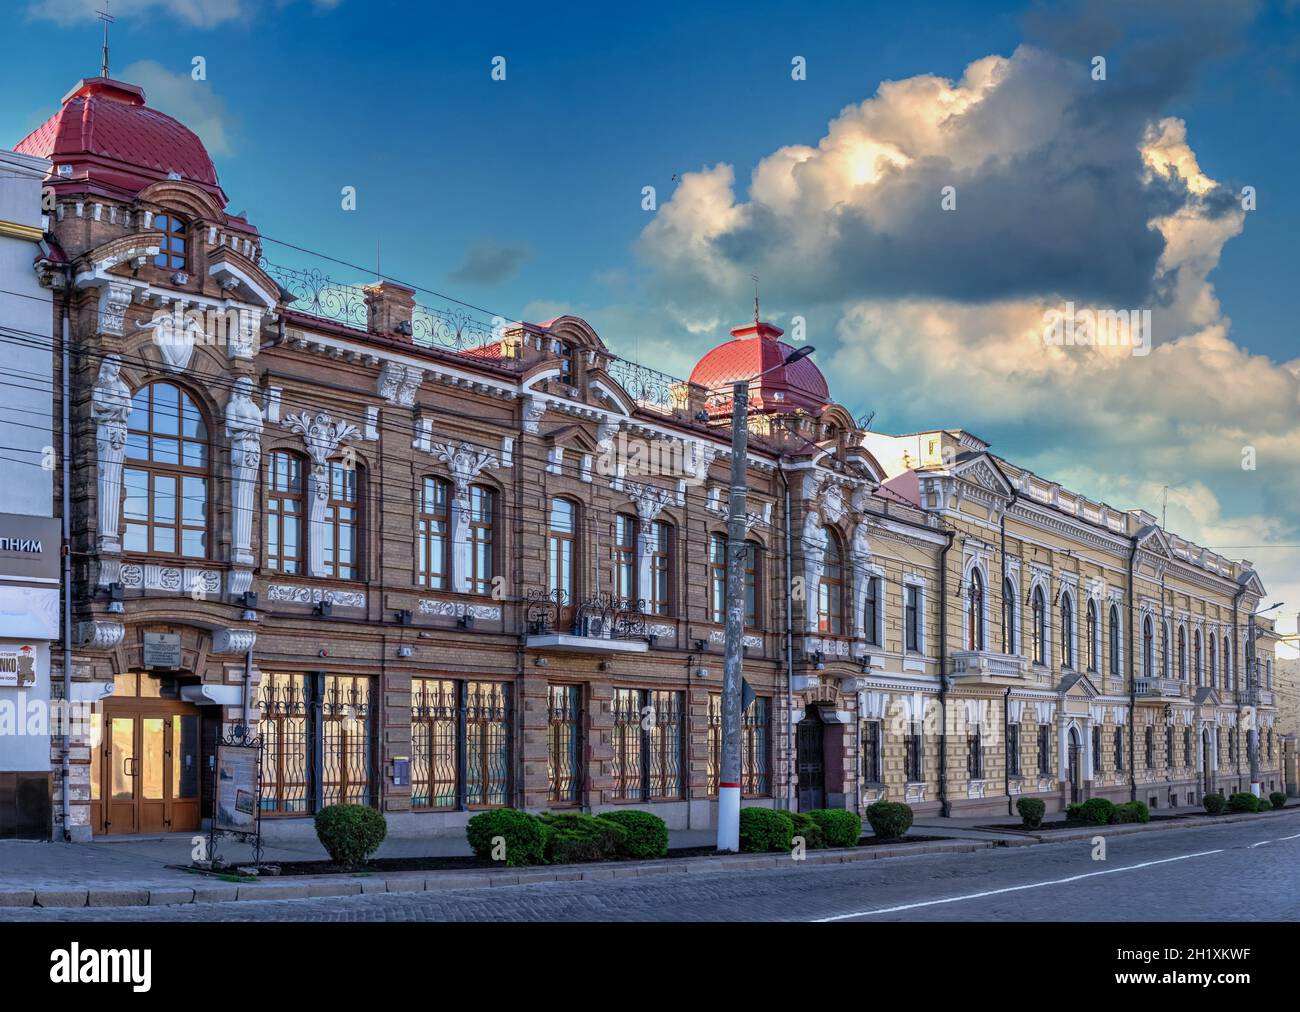 05.09.2021. Kropyvnytskyi, Ukraine. Streets and historical building of Kropyvnytskyi, Ukraine, on a sunny spring morning Stock Photo